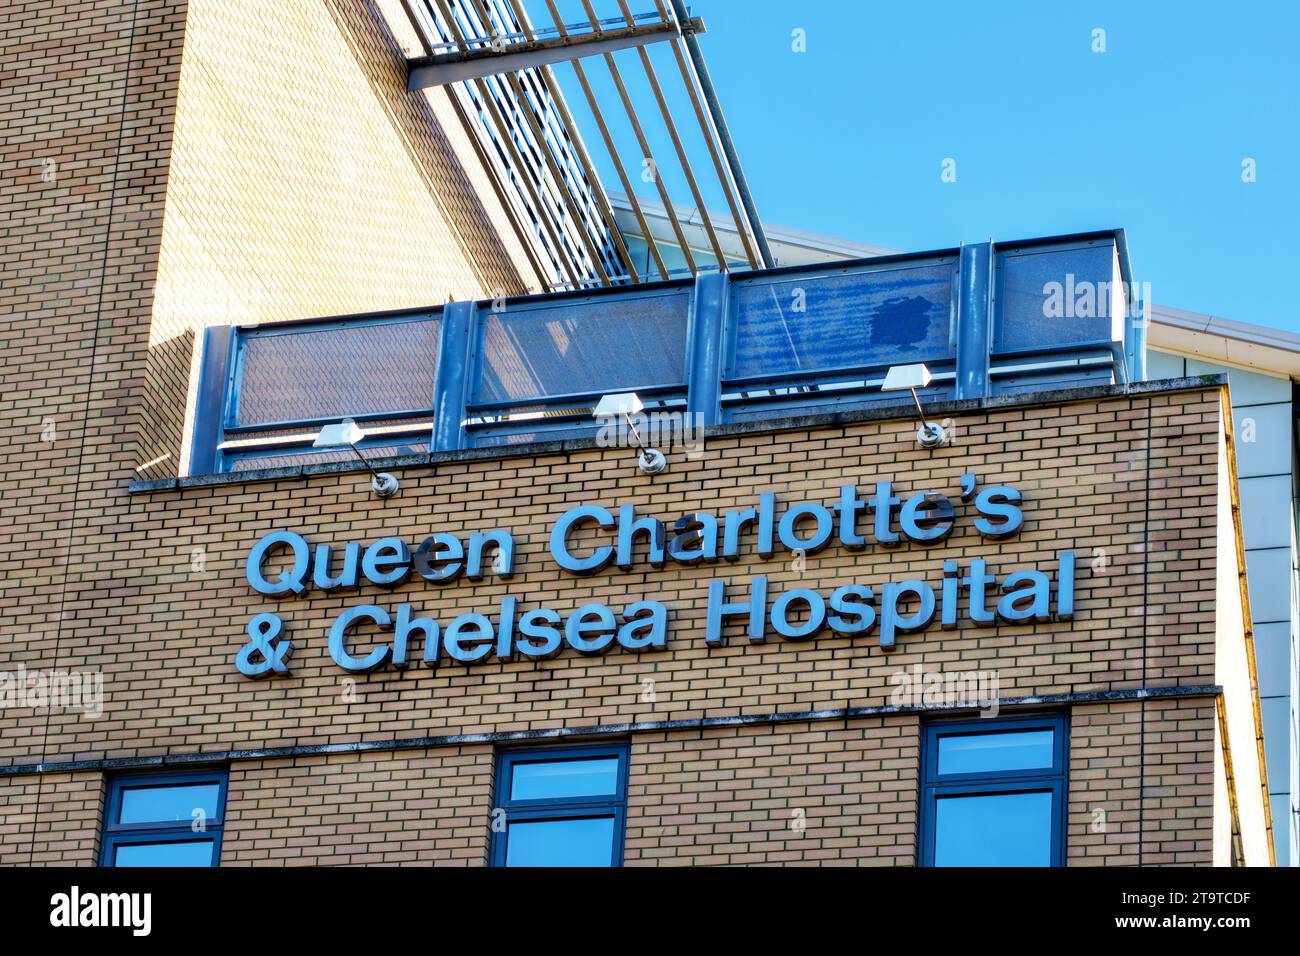 Queen Charlotte’s & Chelsea Hospital, Du Cane Road, Borough of Hammersmith & Fulham, London, England, UK Stock Photo